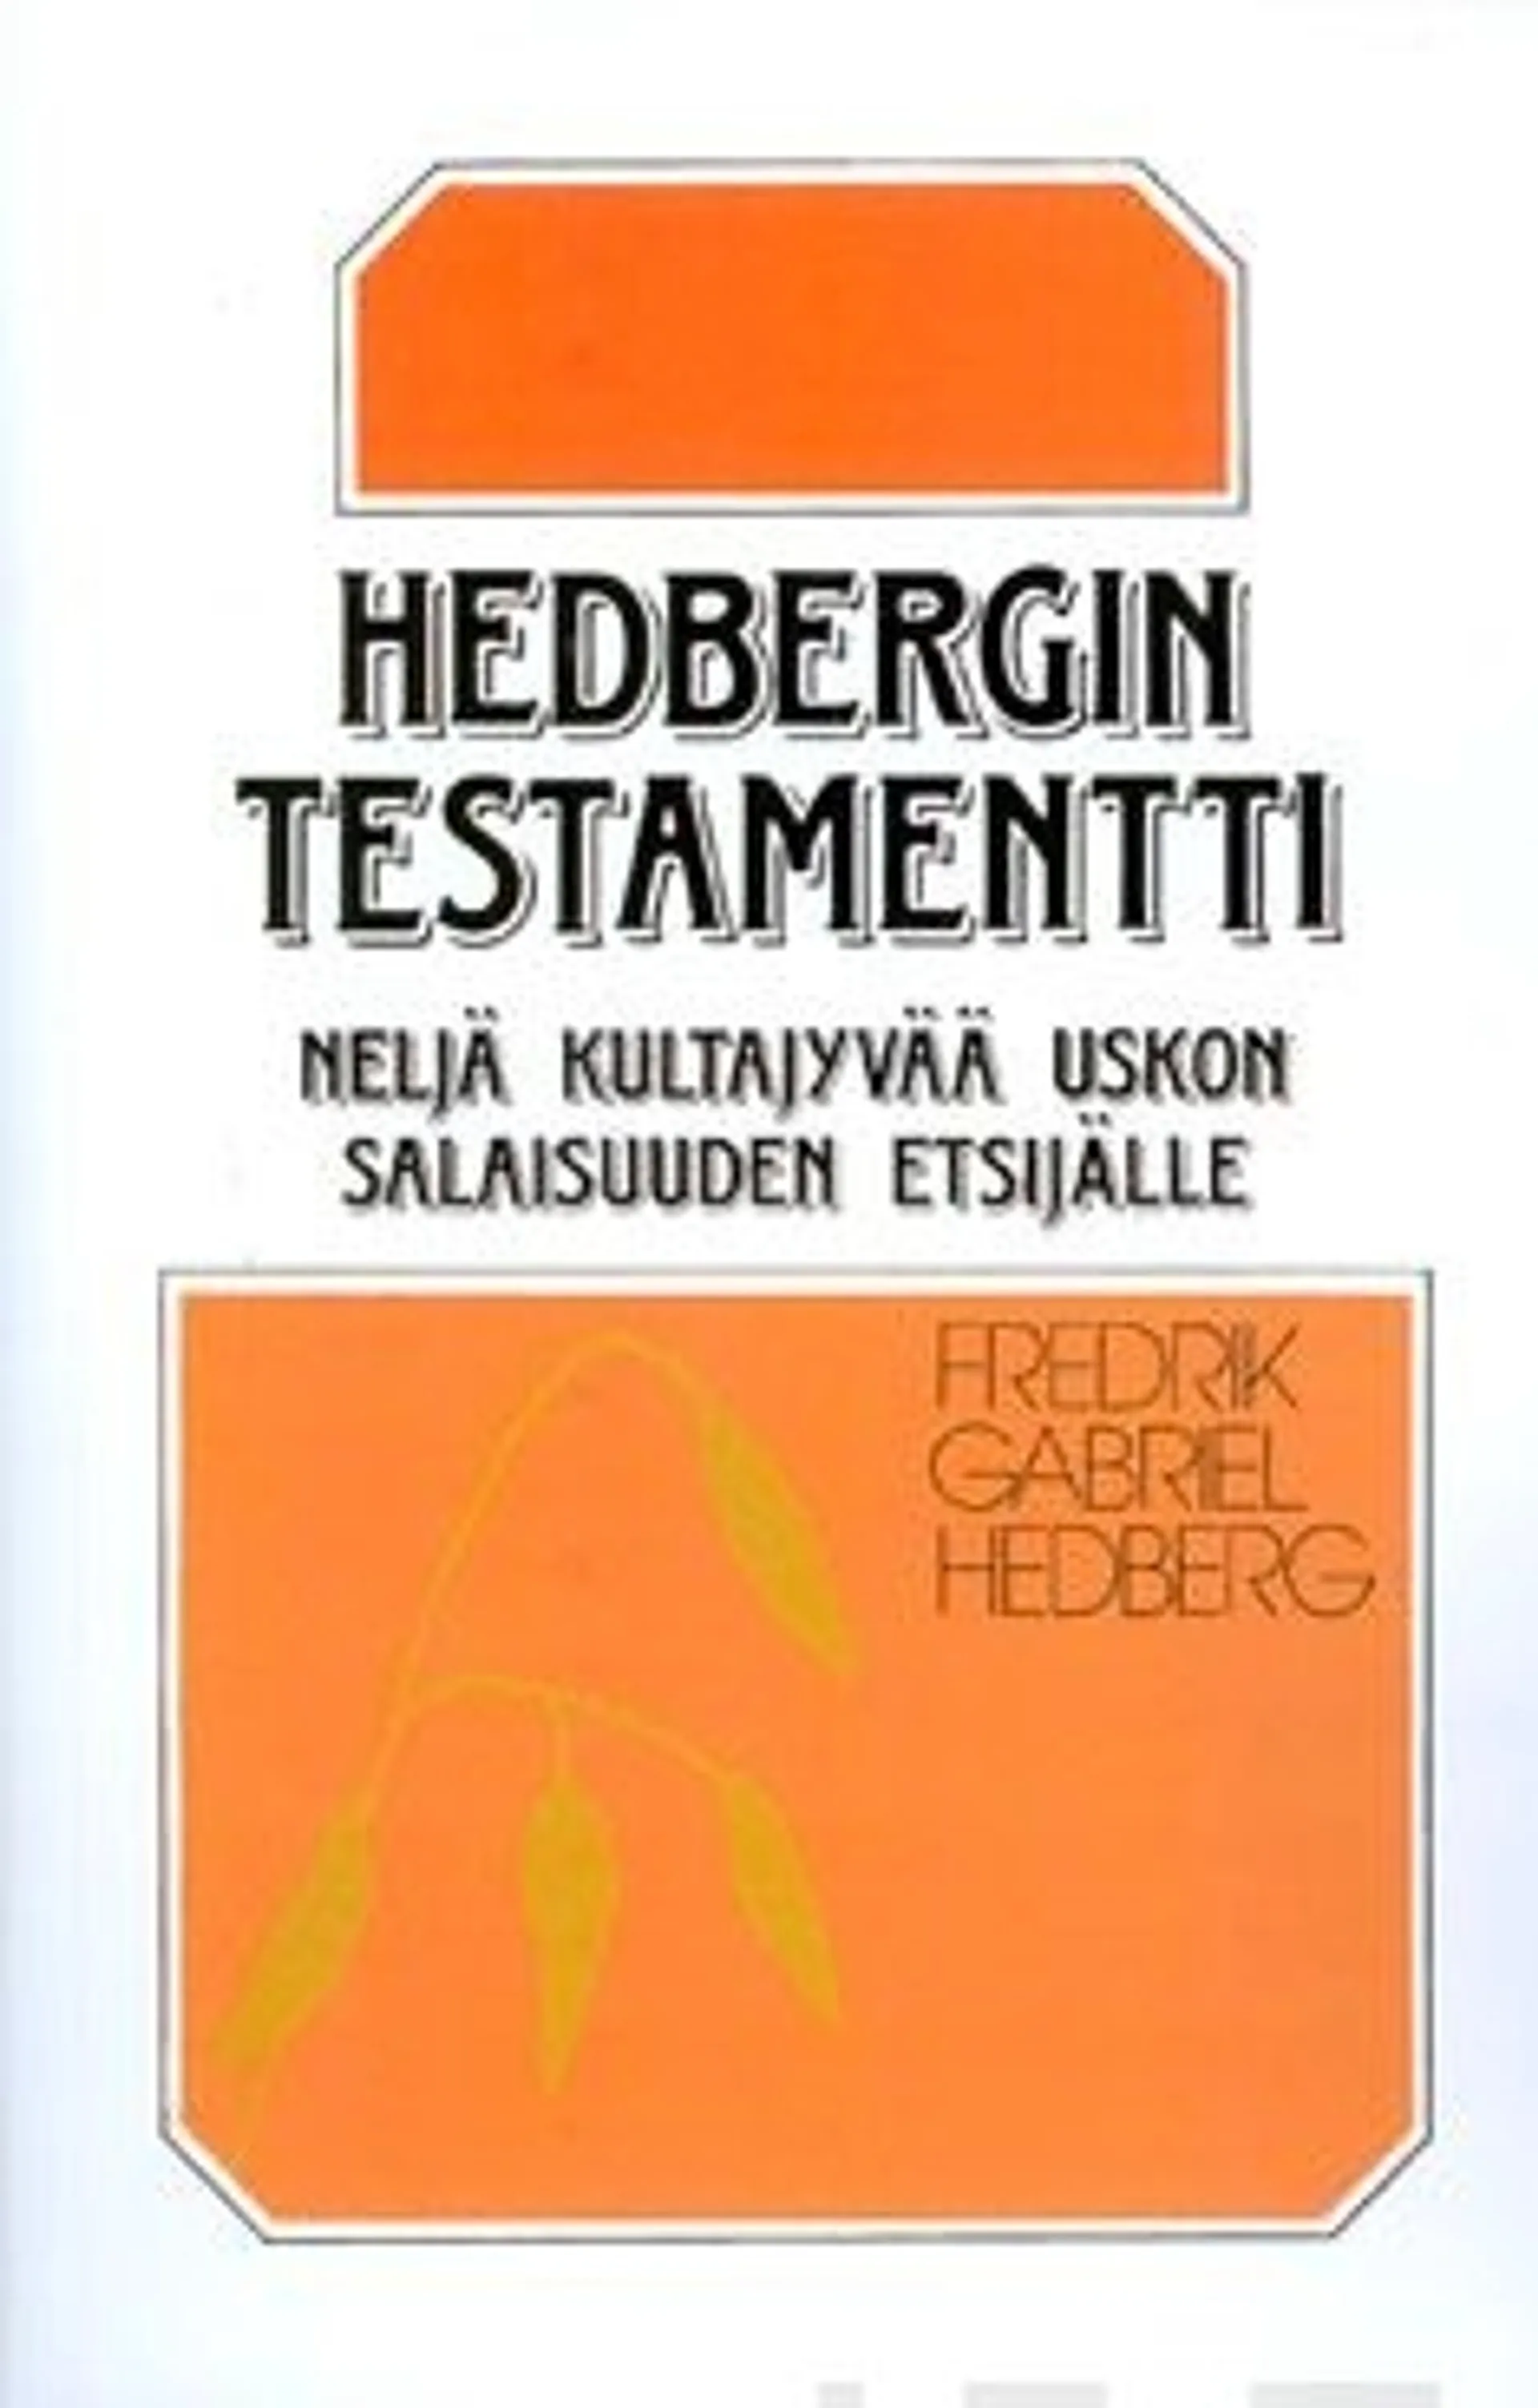 Hedberg, Hedbergin testamentti